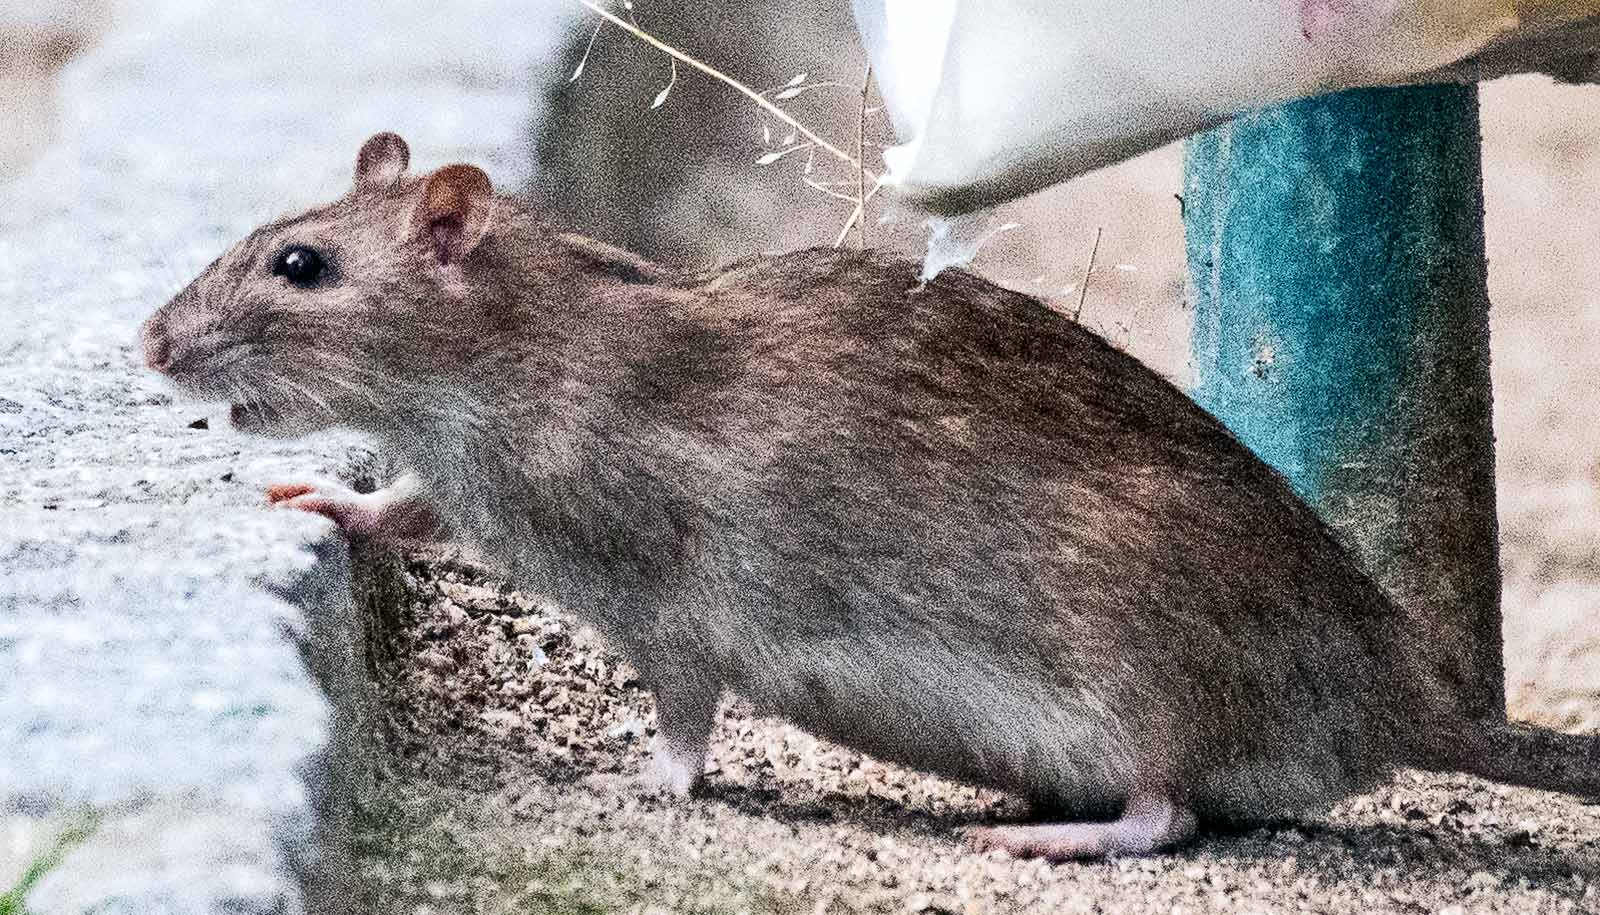 A rat steps up onto a curb.